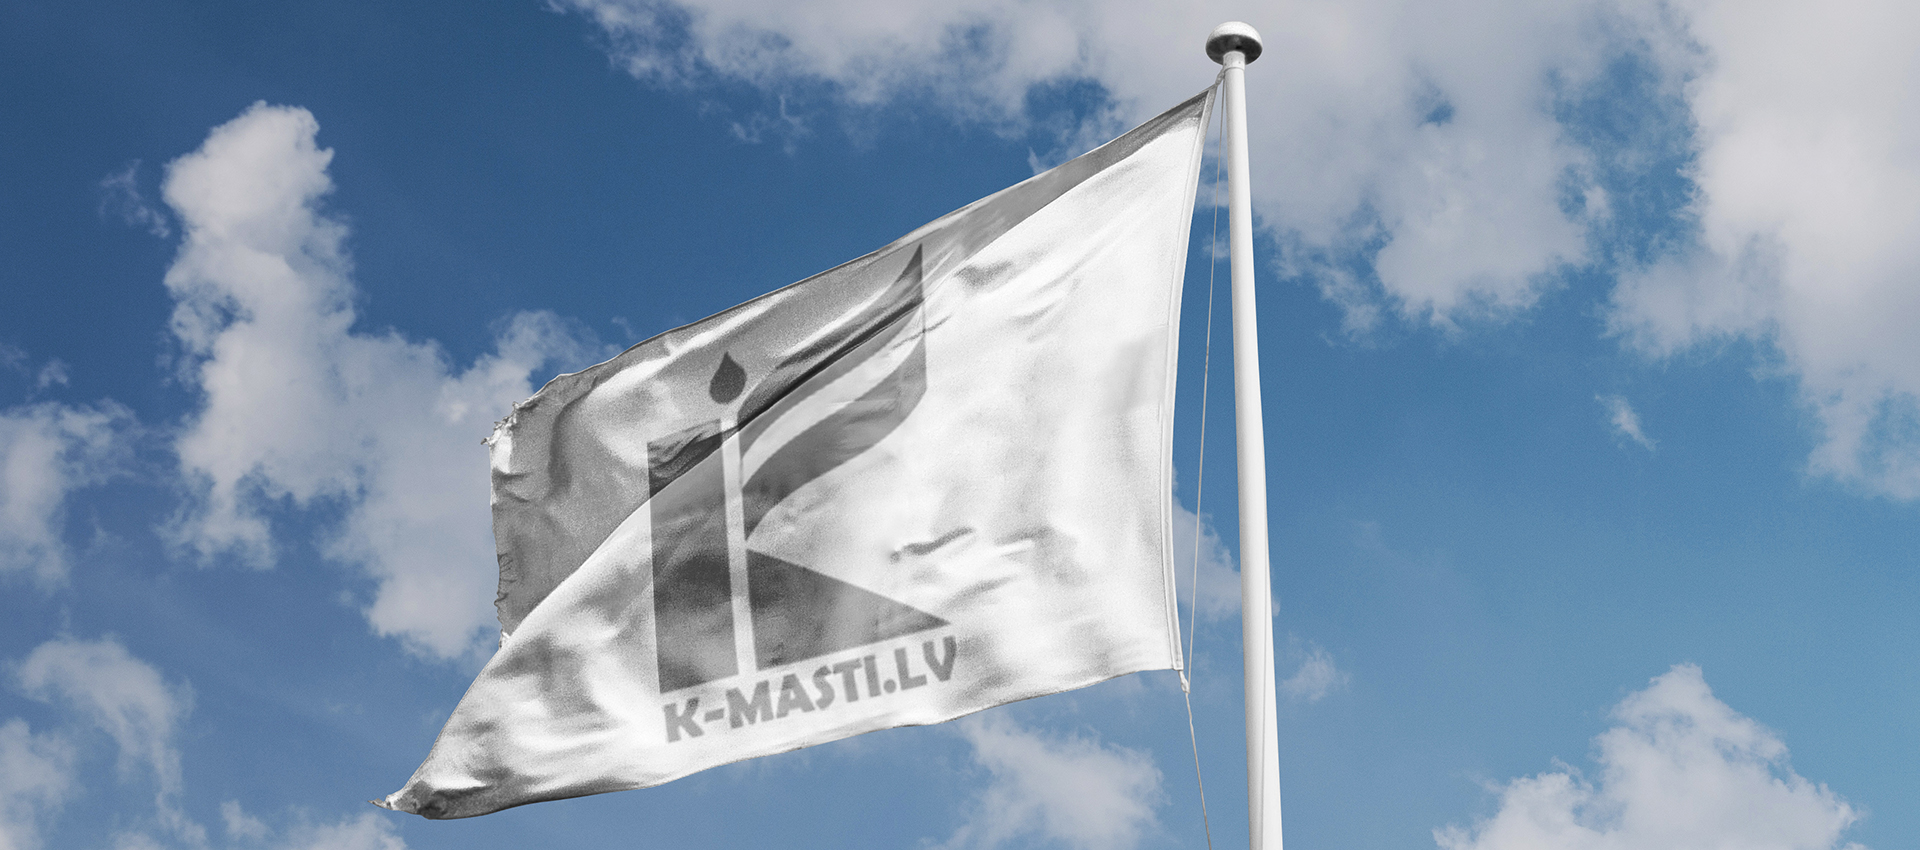 K-masti karogs